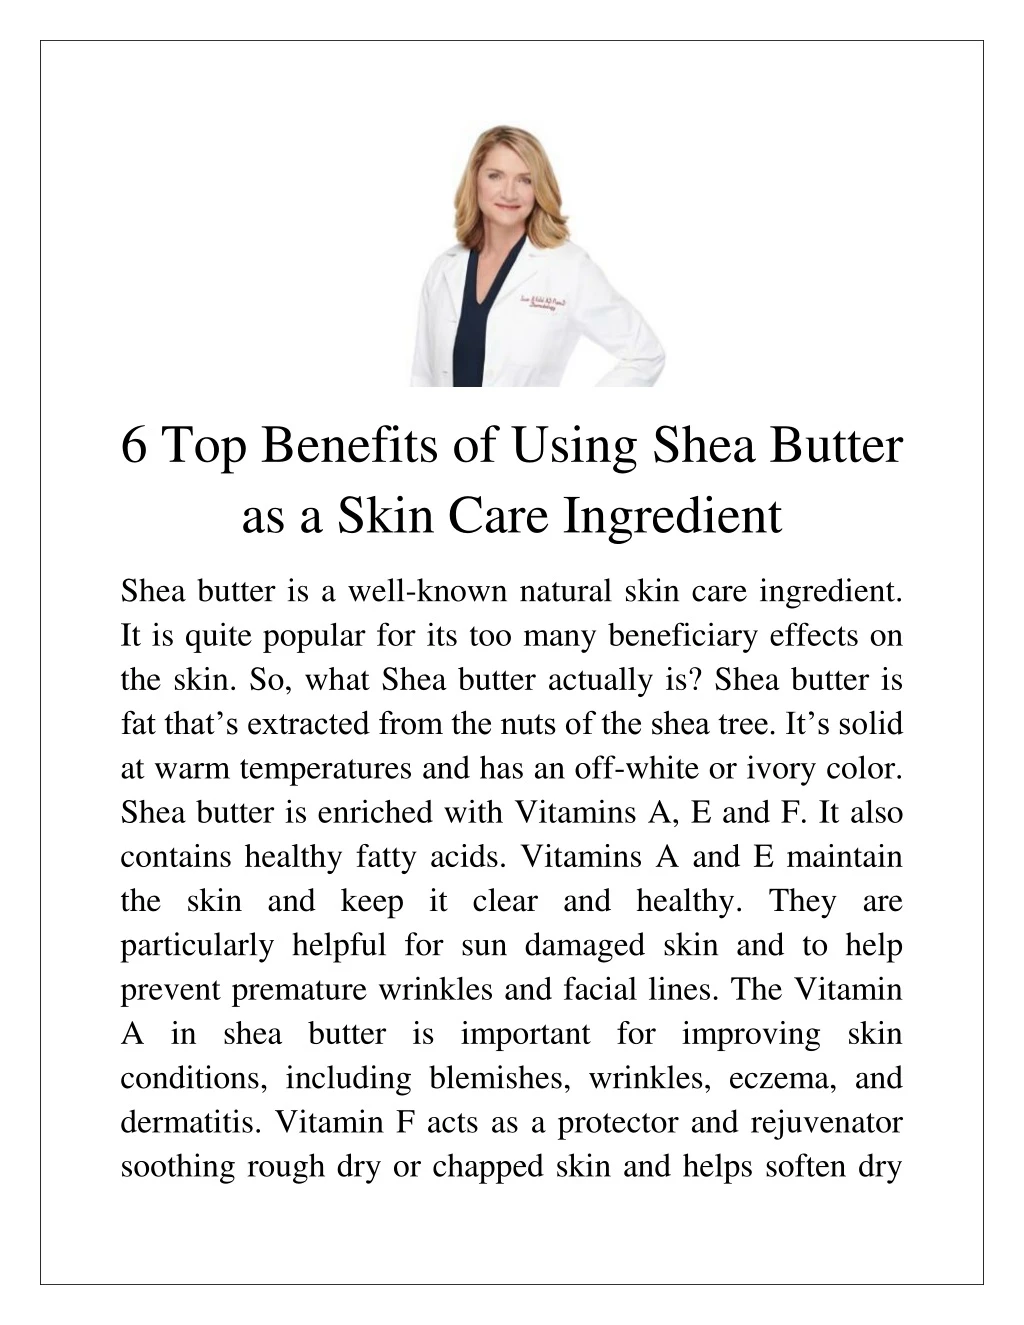 6 top benefits of using shea butter as a skin